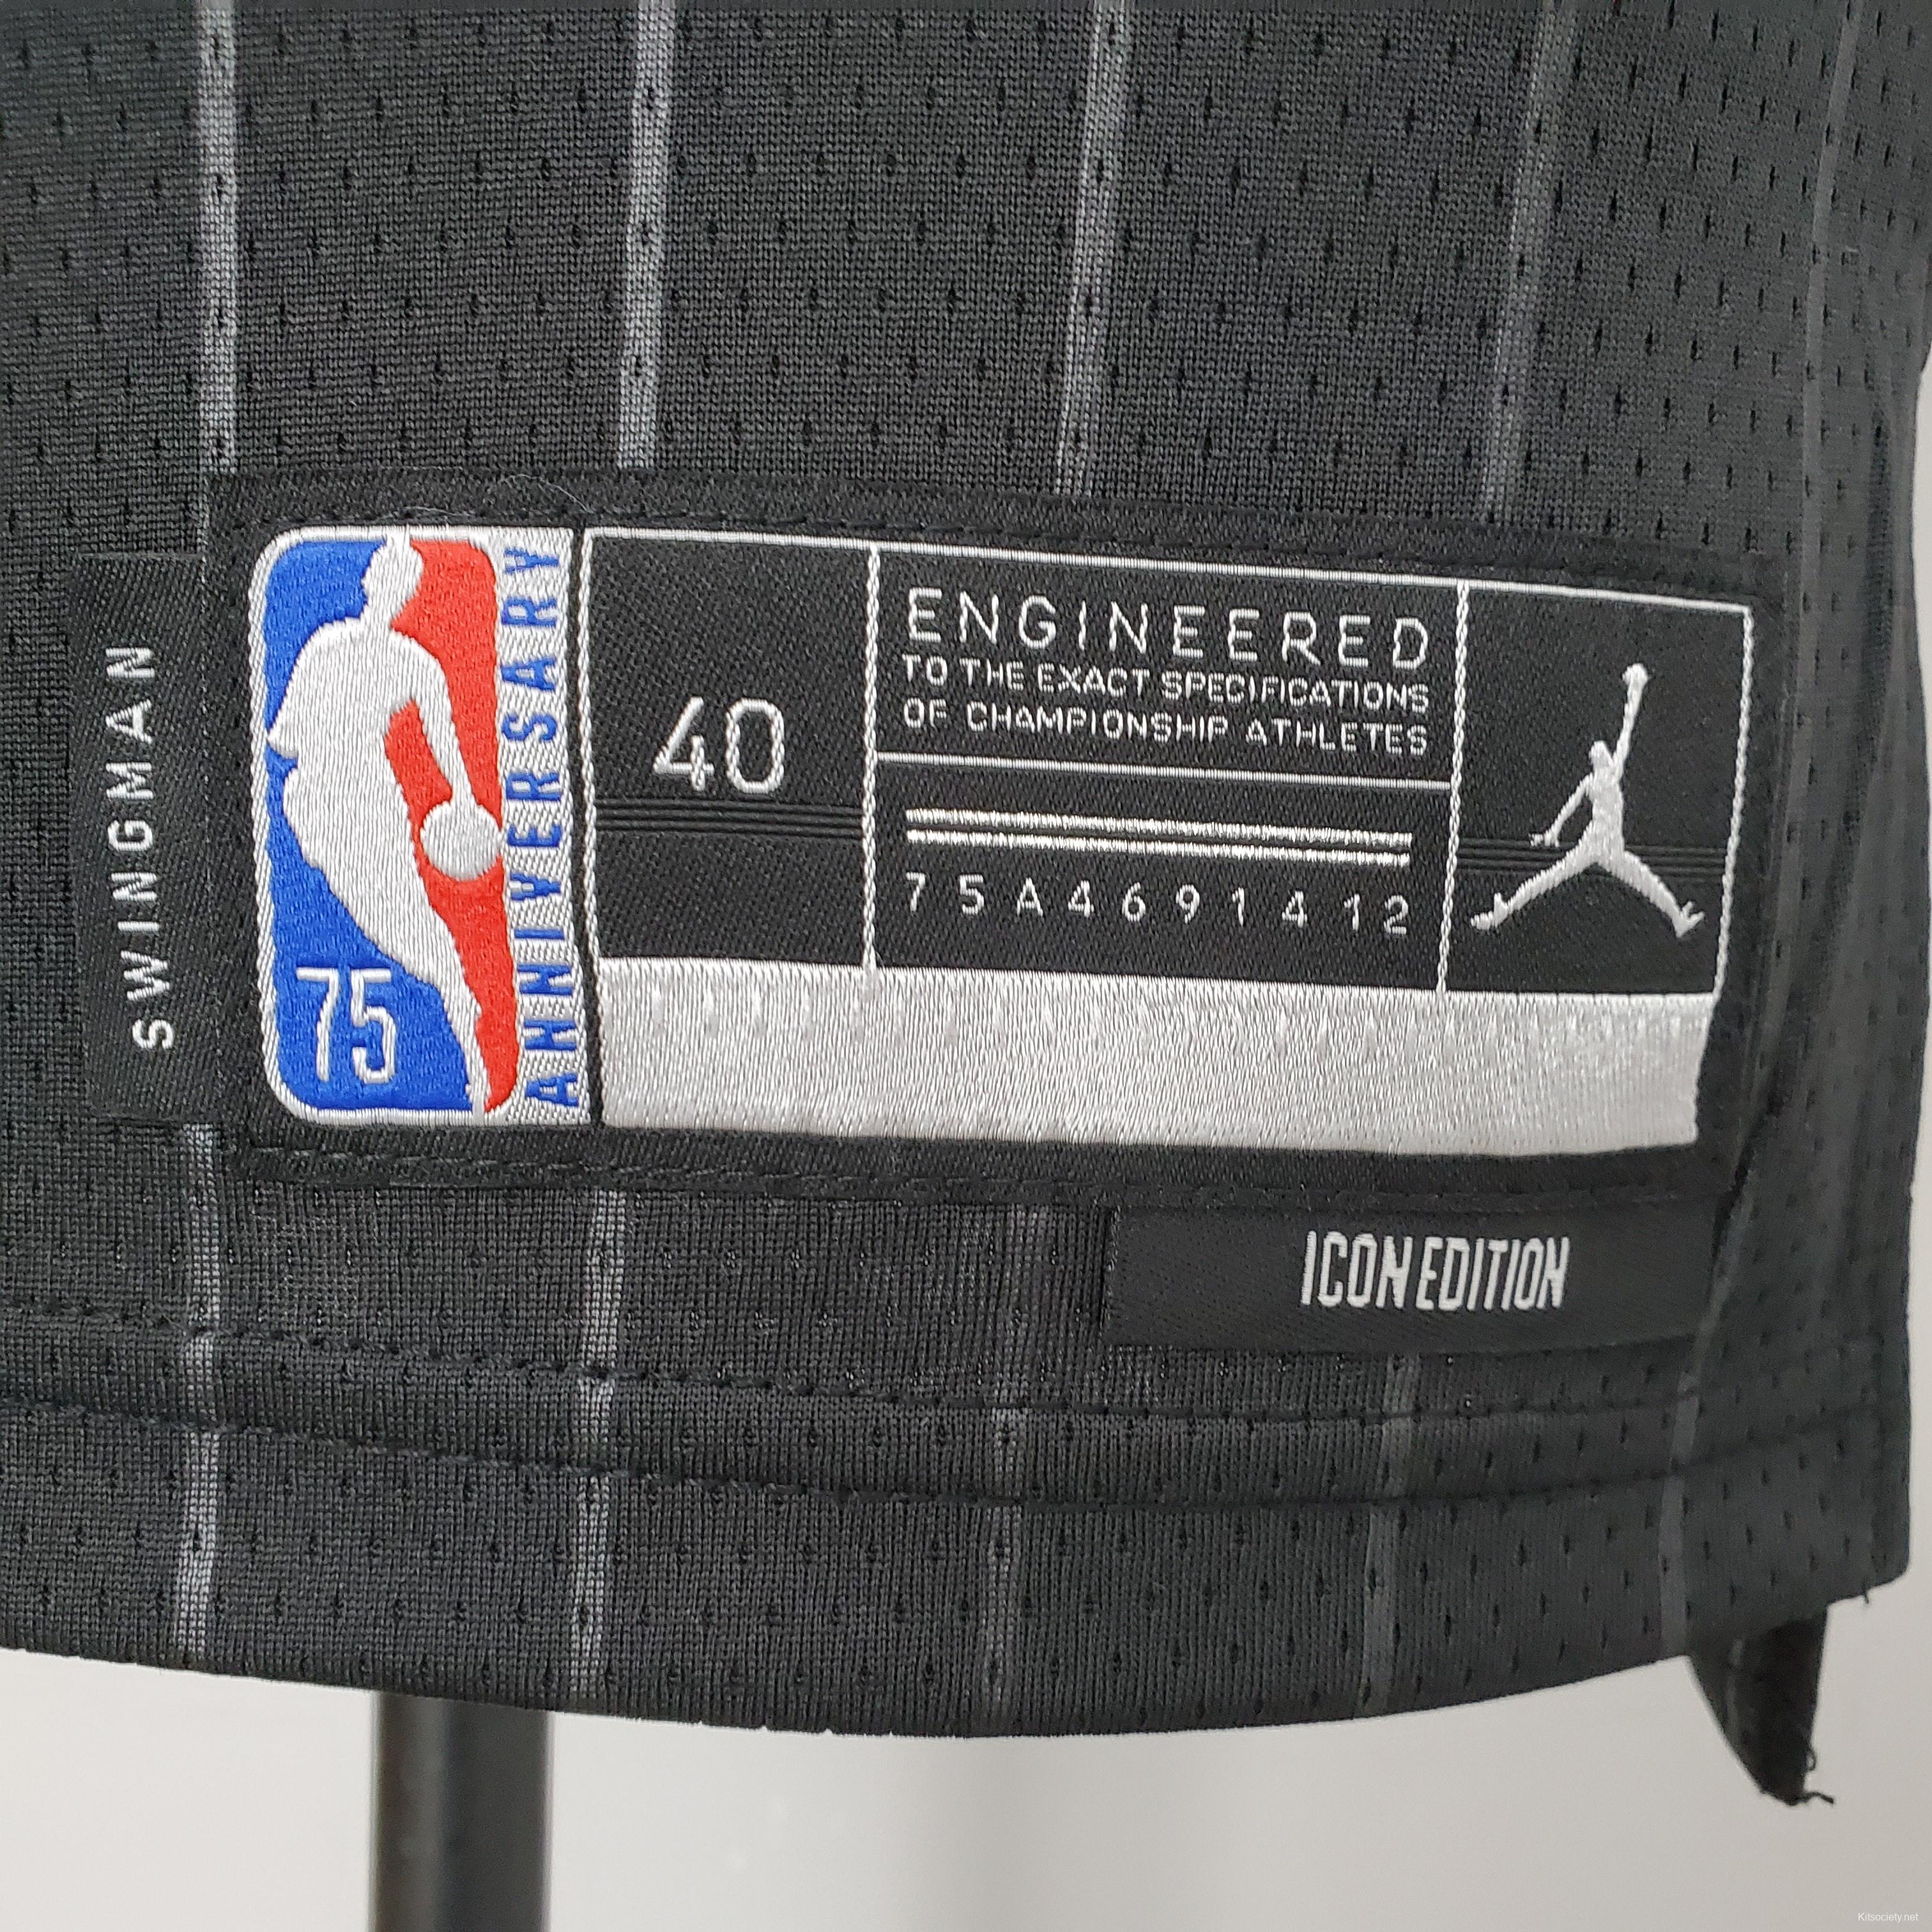 NBA Nets Simmons #10 Flyer Grey Jersey - Kitsociety